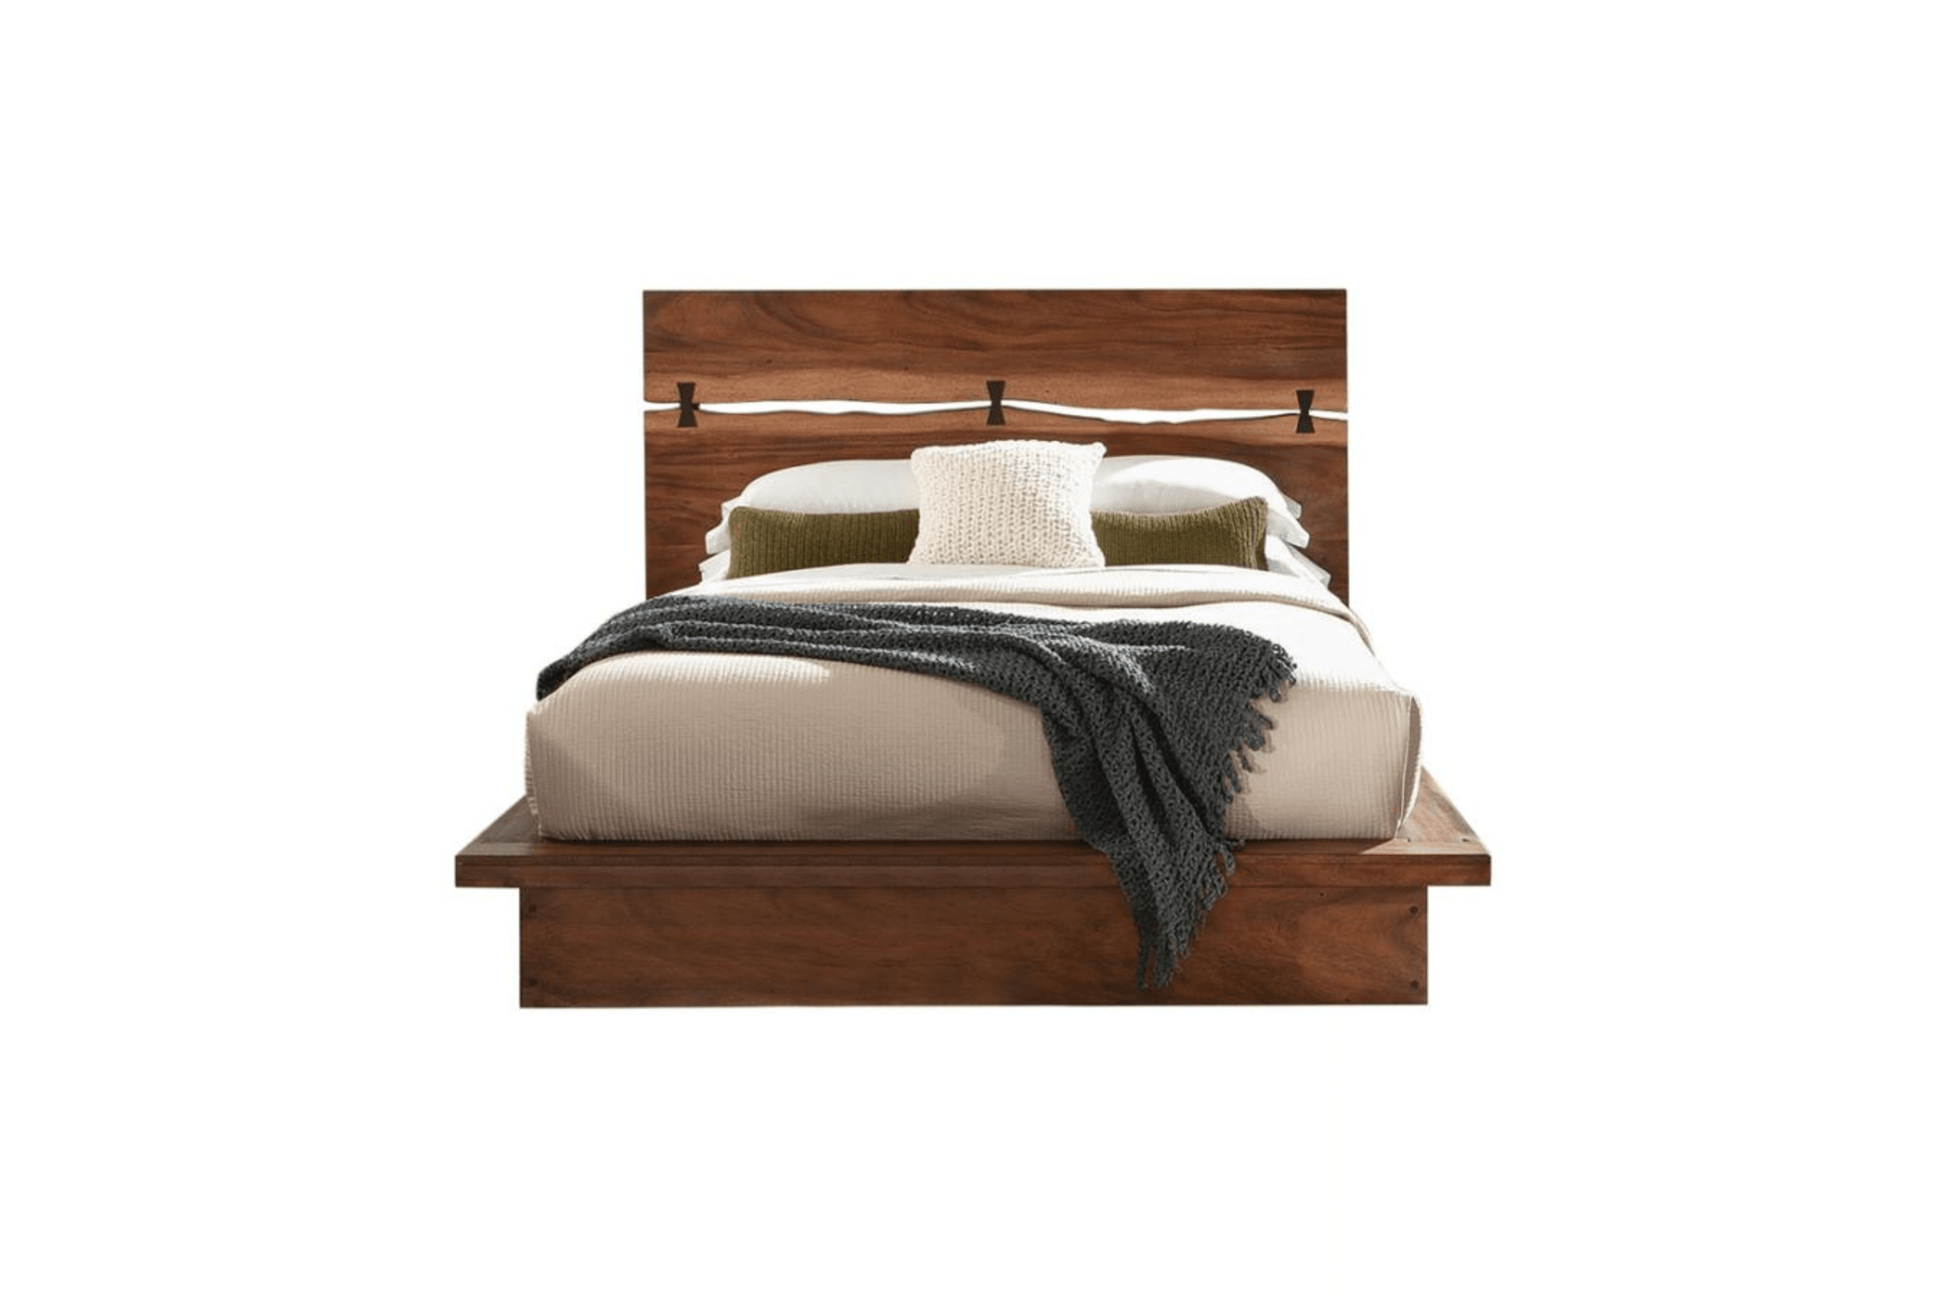 Eastern bed design with smokey walnut finish